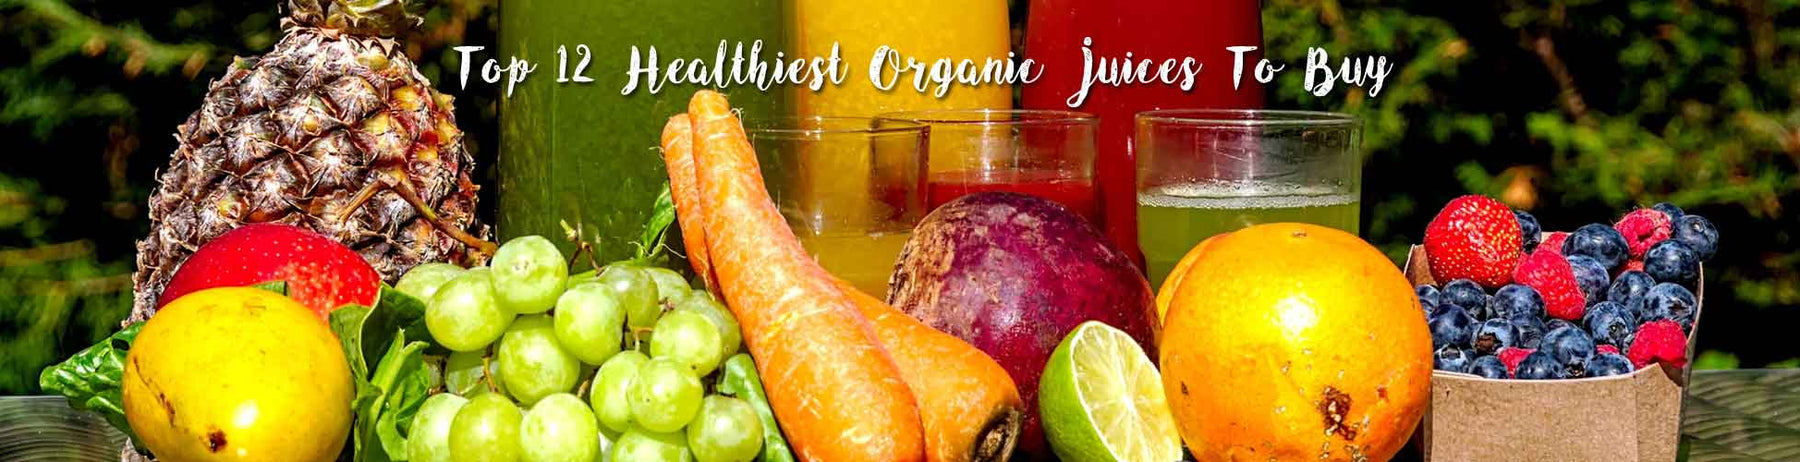 Top 12 Healthiest Organic Juices To Buy